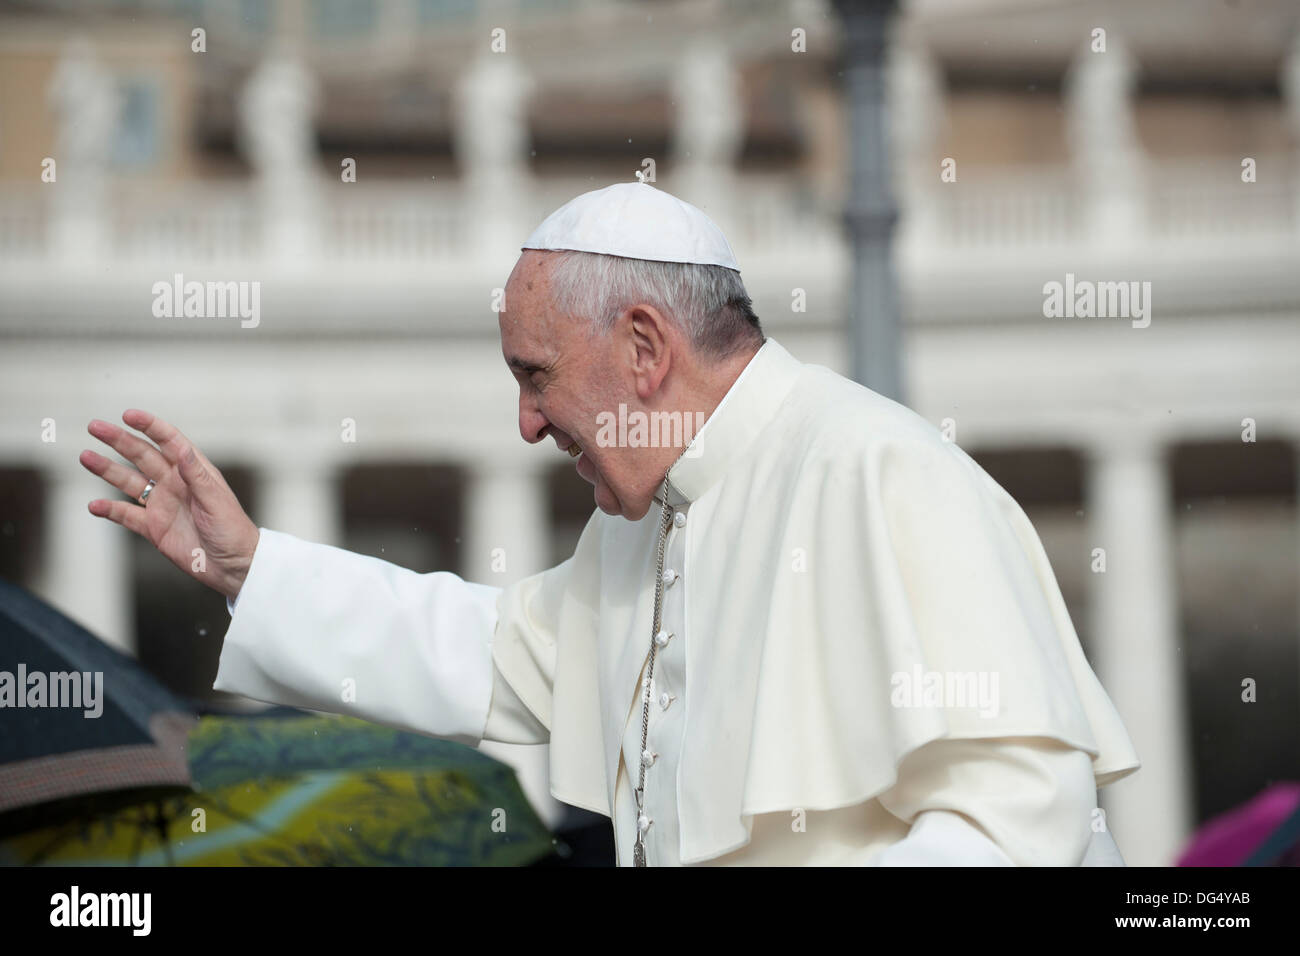 Papst Francesco begrüßt die Gläubigen auf dem Petersplatz. Stockfoto